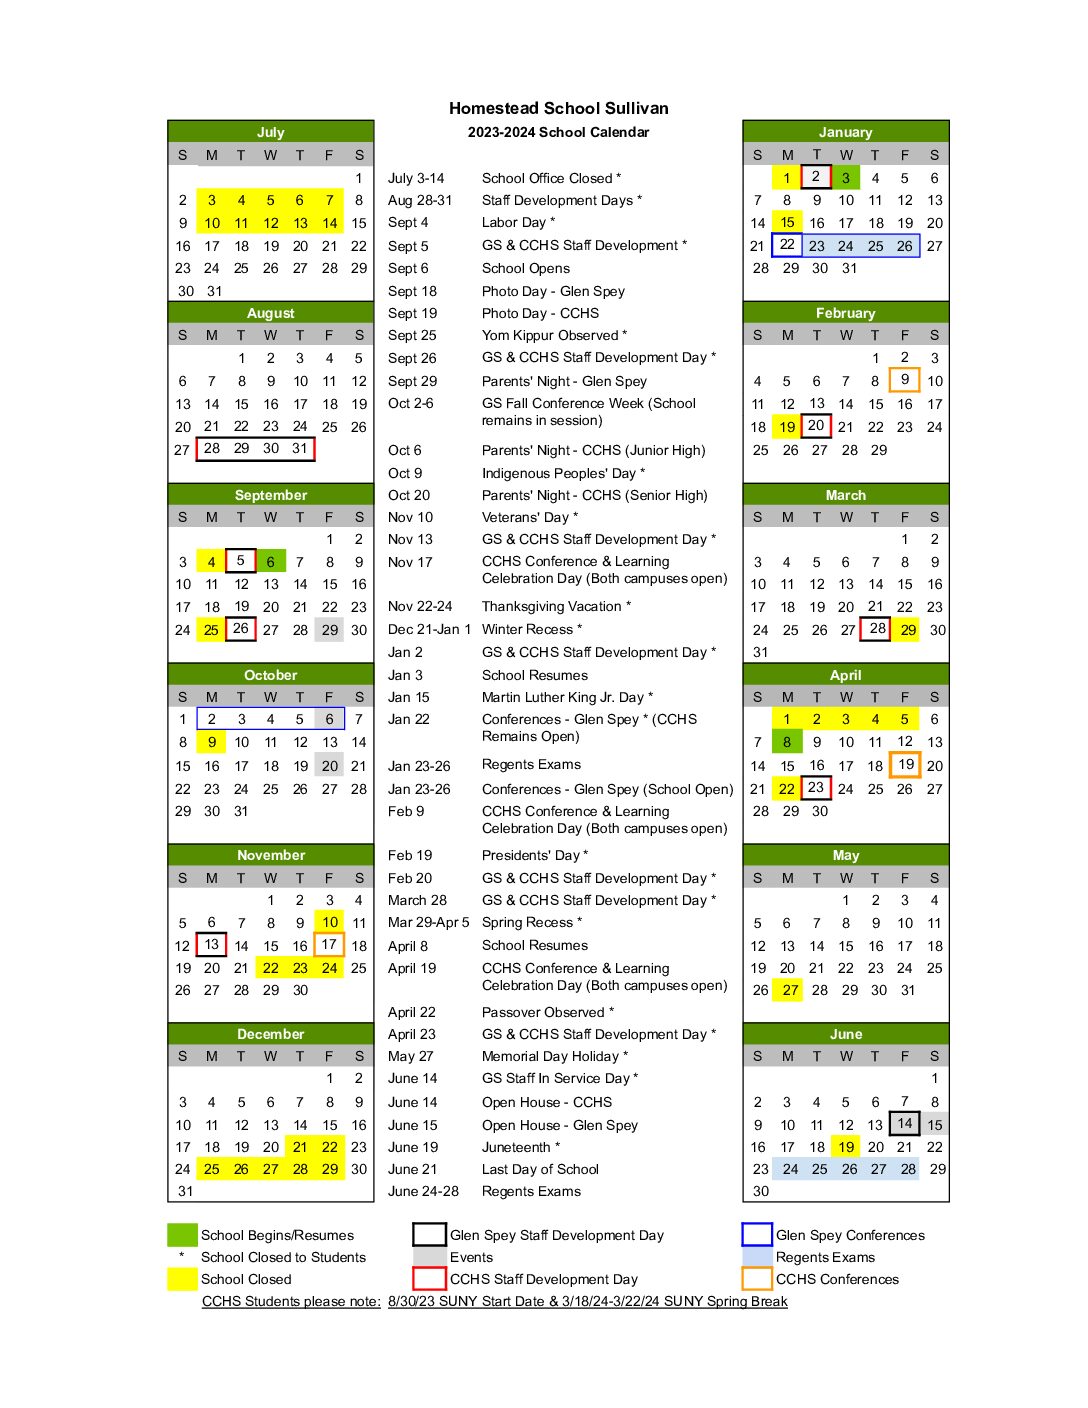 Homestead School Calendar, Montessori School & Permaculture Farm